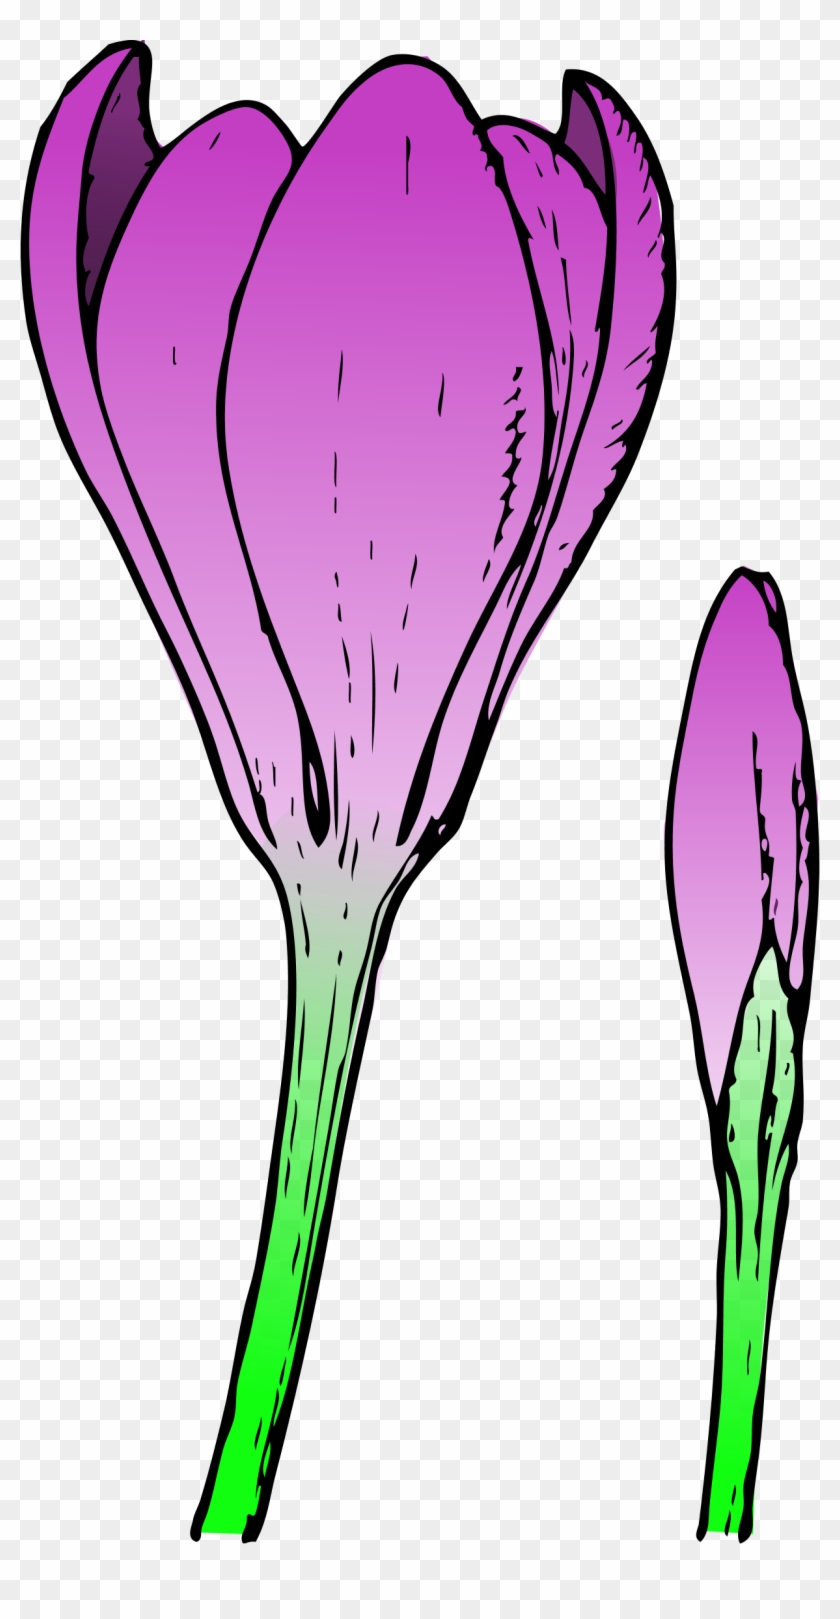 Spring Flowers Clip Art - Crocus Flower - Png Download #430616